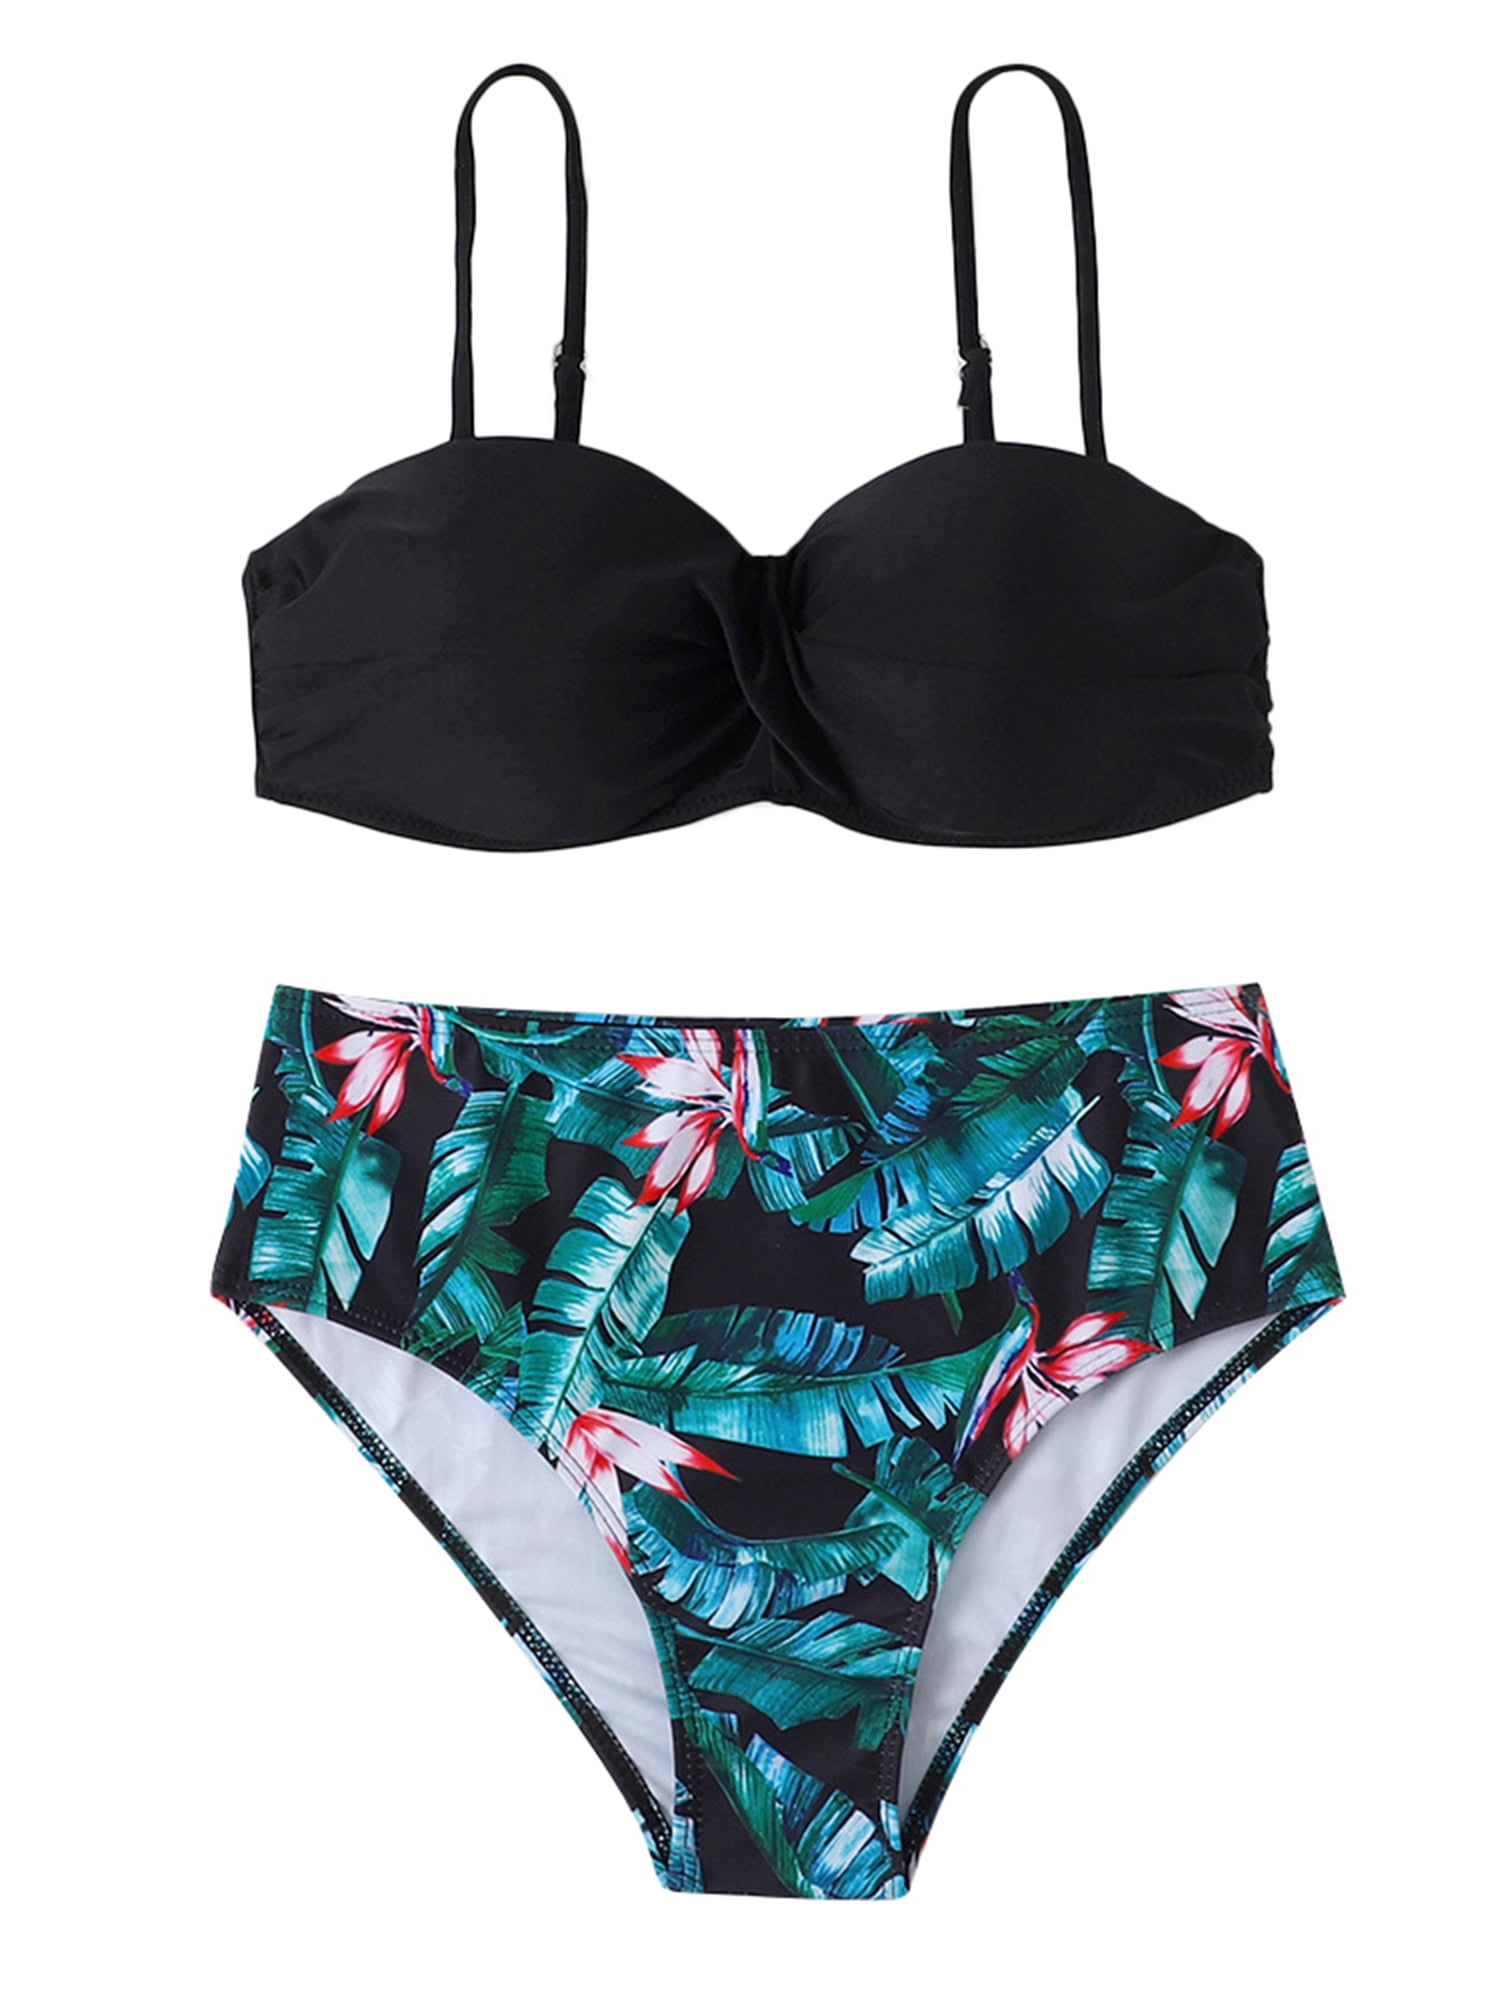 Woman Mesh Bikini shell Color Patchwork Sleeveless Bra+Underwear Swimsuit